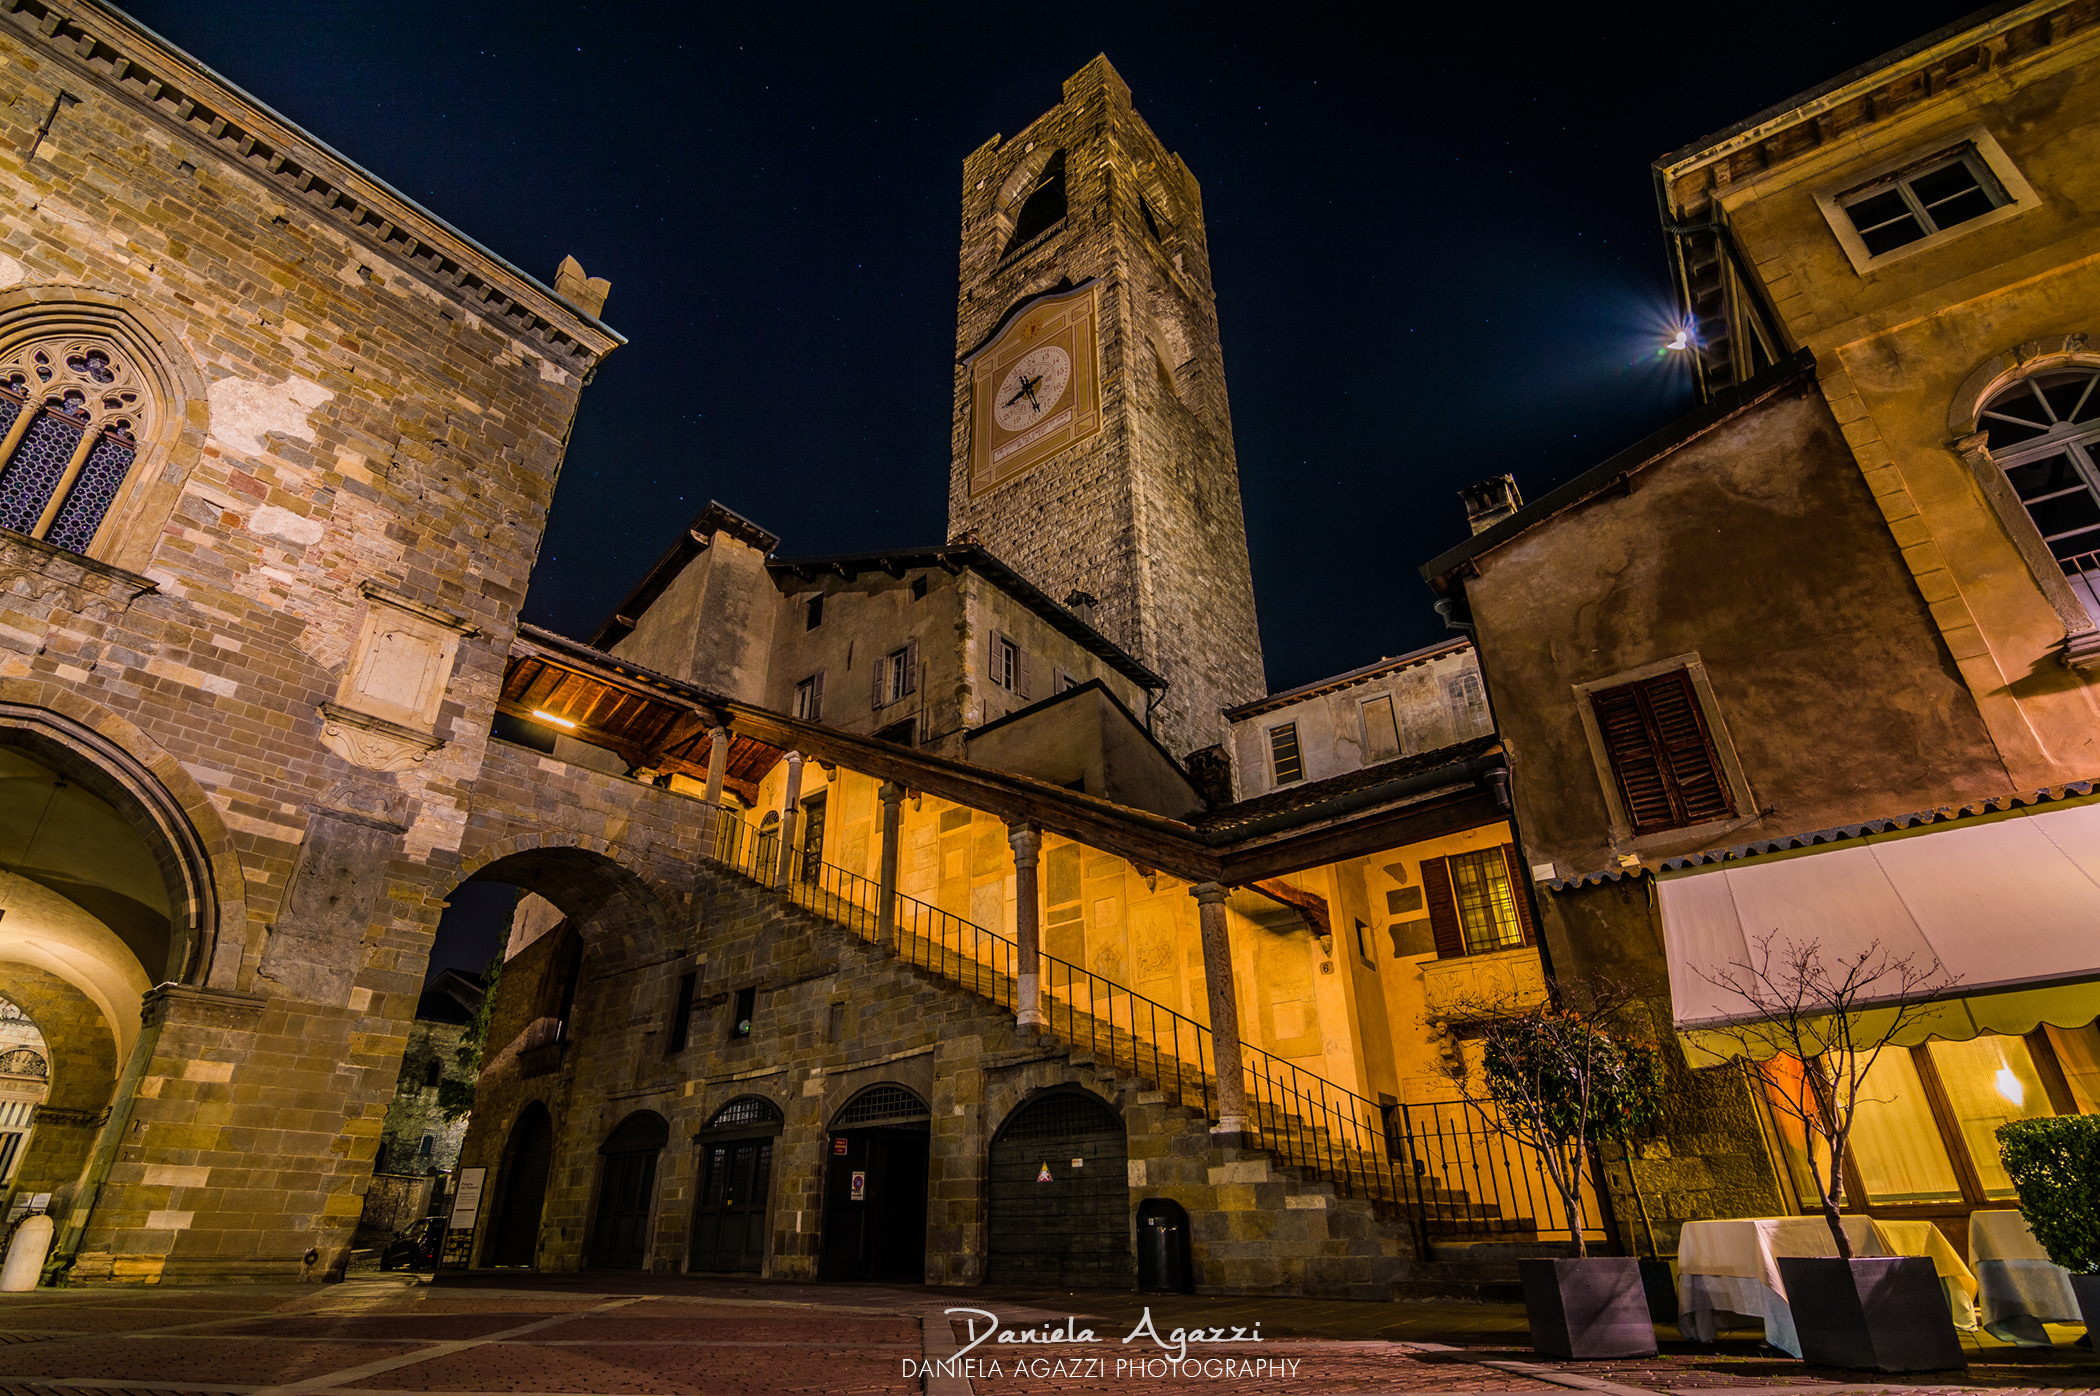 The bell tower of Bergamo Alta...